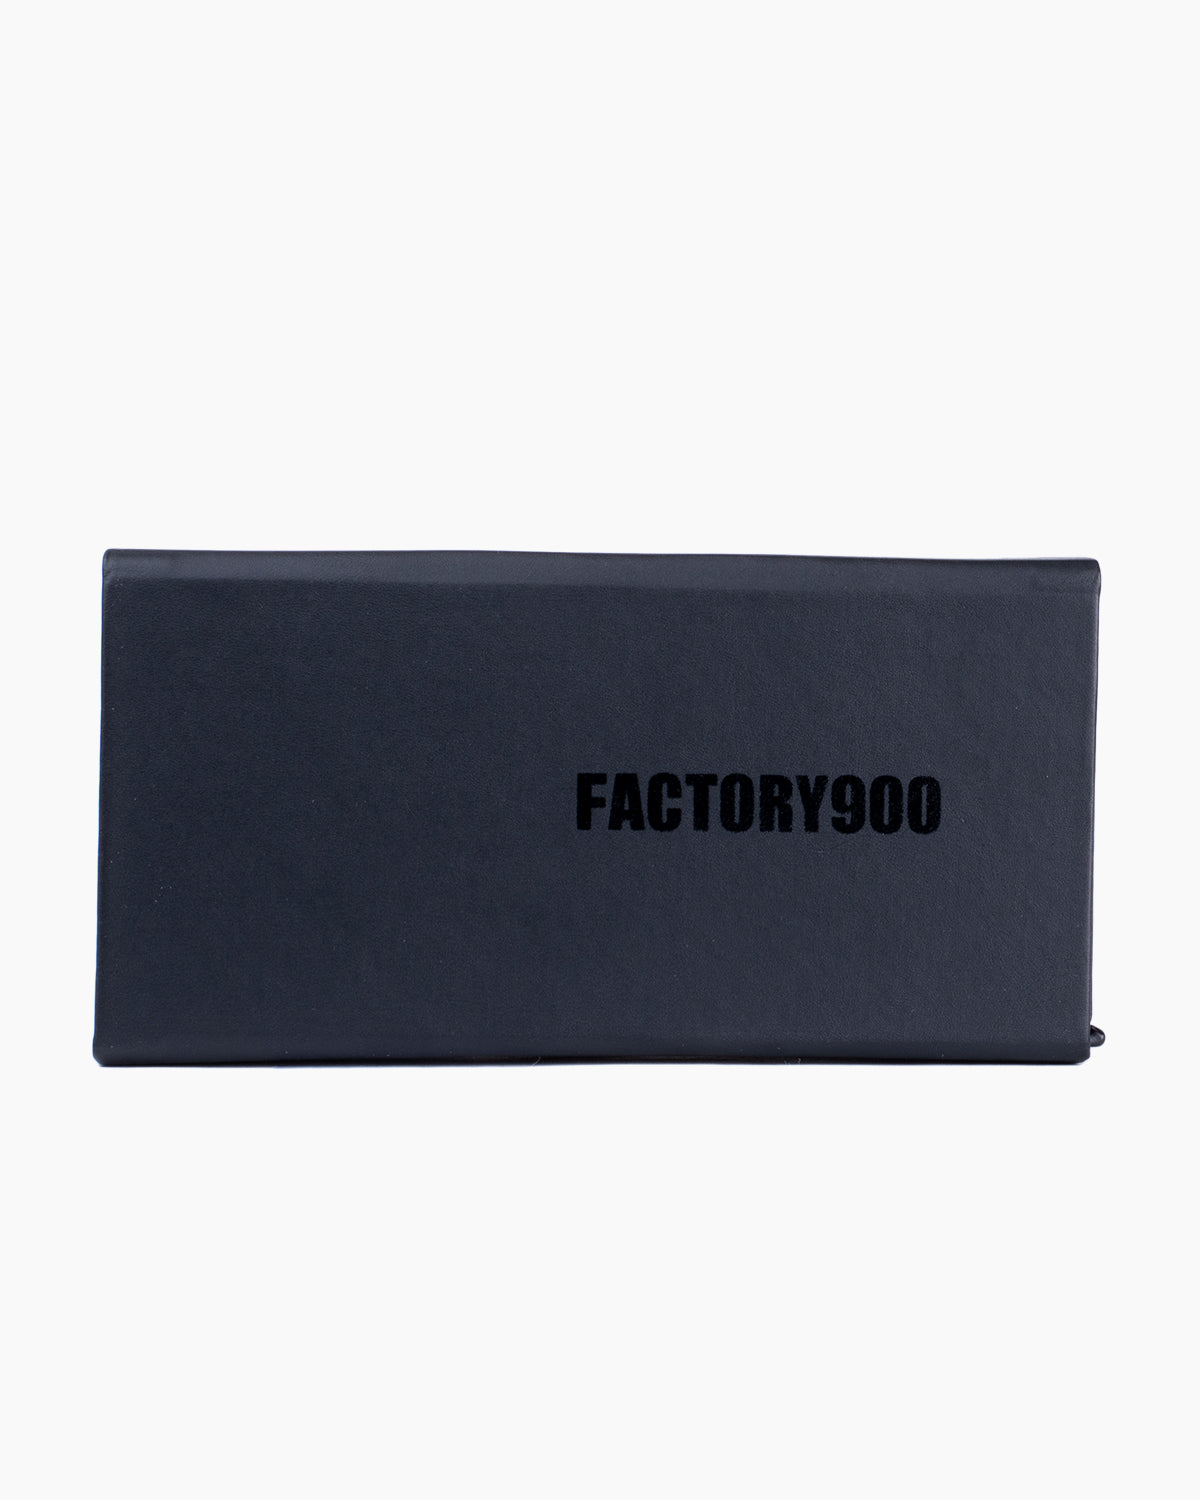 Factory 900 - ann - 9001 | Bar à lunettes